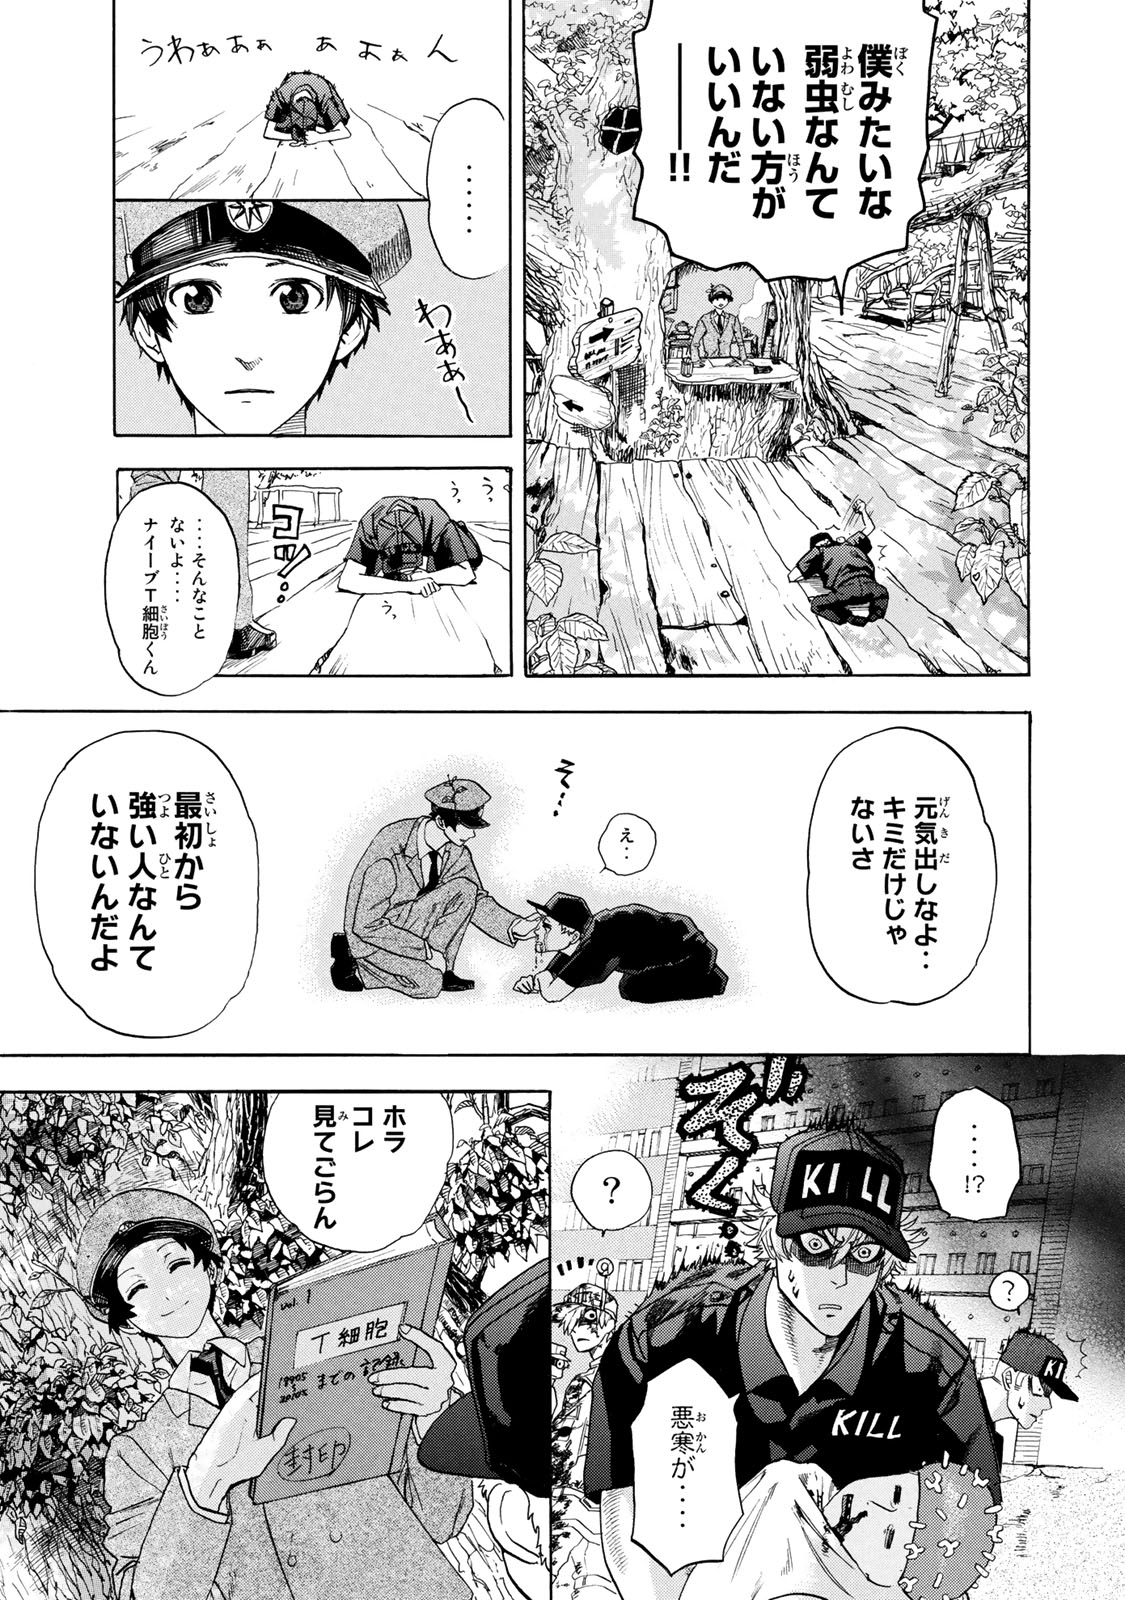 Hataraku Saibou - Chapter 3 - Page 19